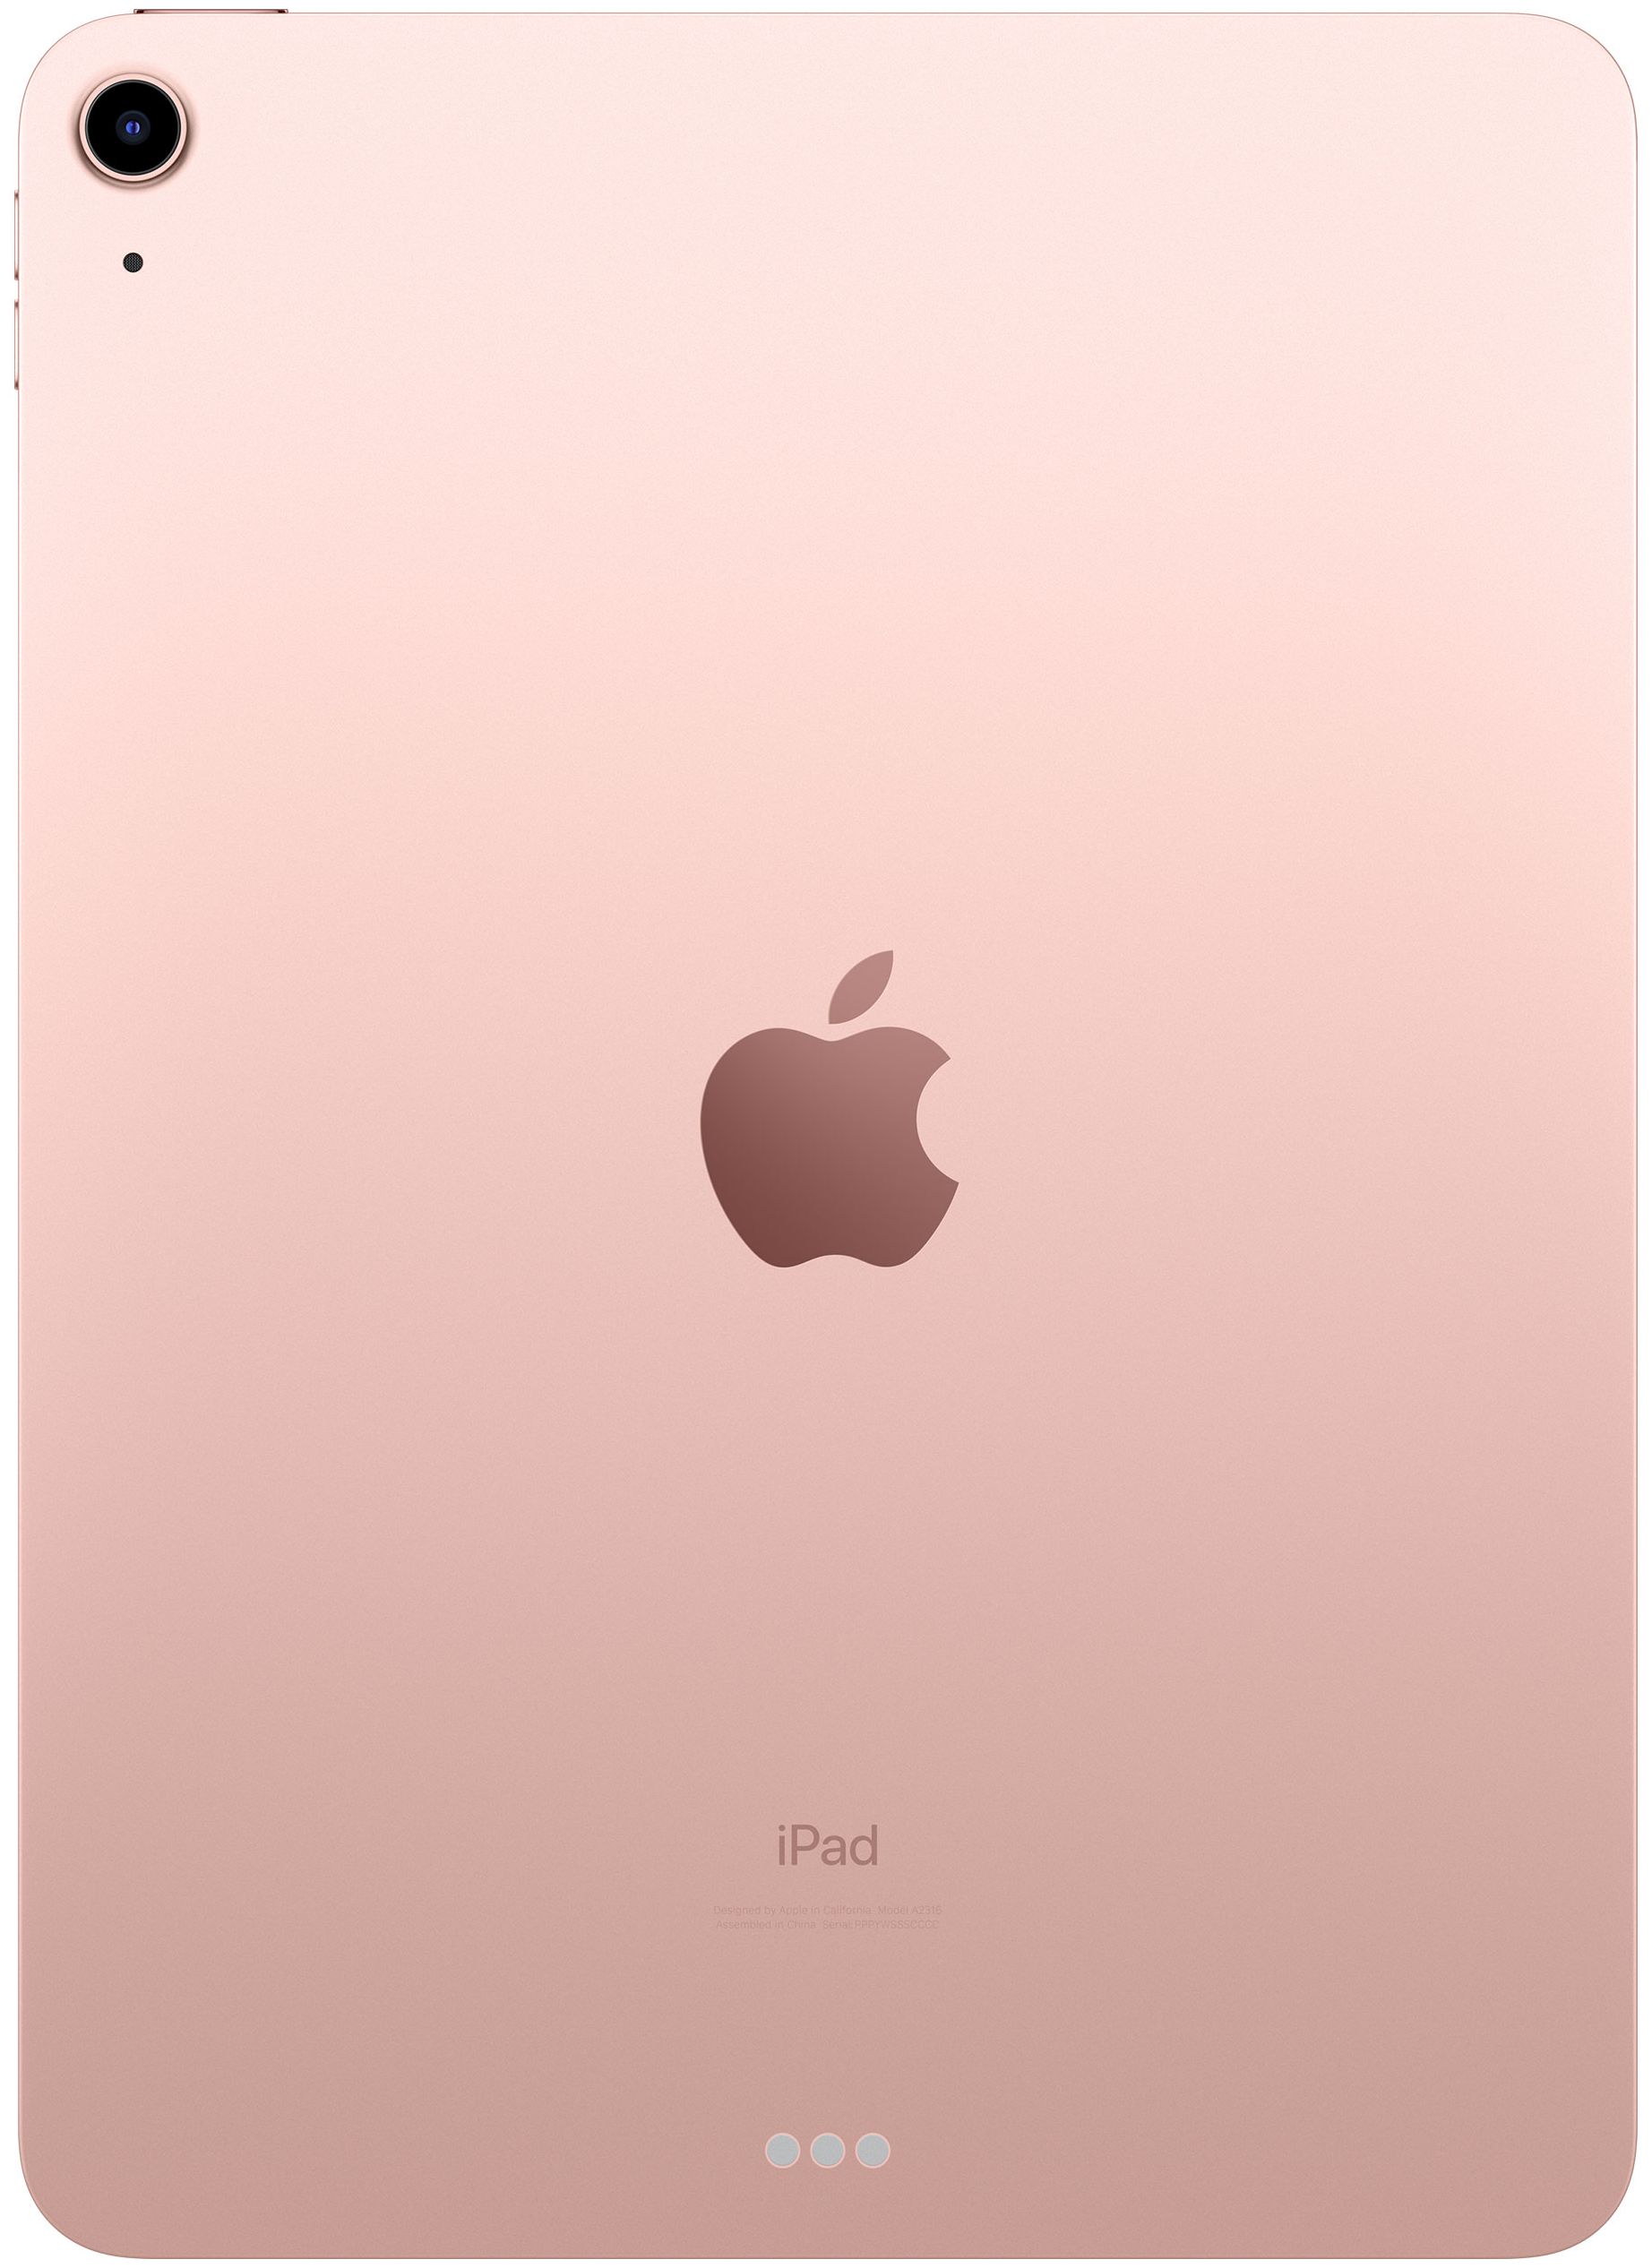 Apple iPad Air 2020 64Gb Wi-Fi - размеры: 247.6x178.5x6.1 мм, вес: 458 г